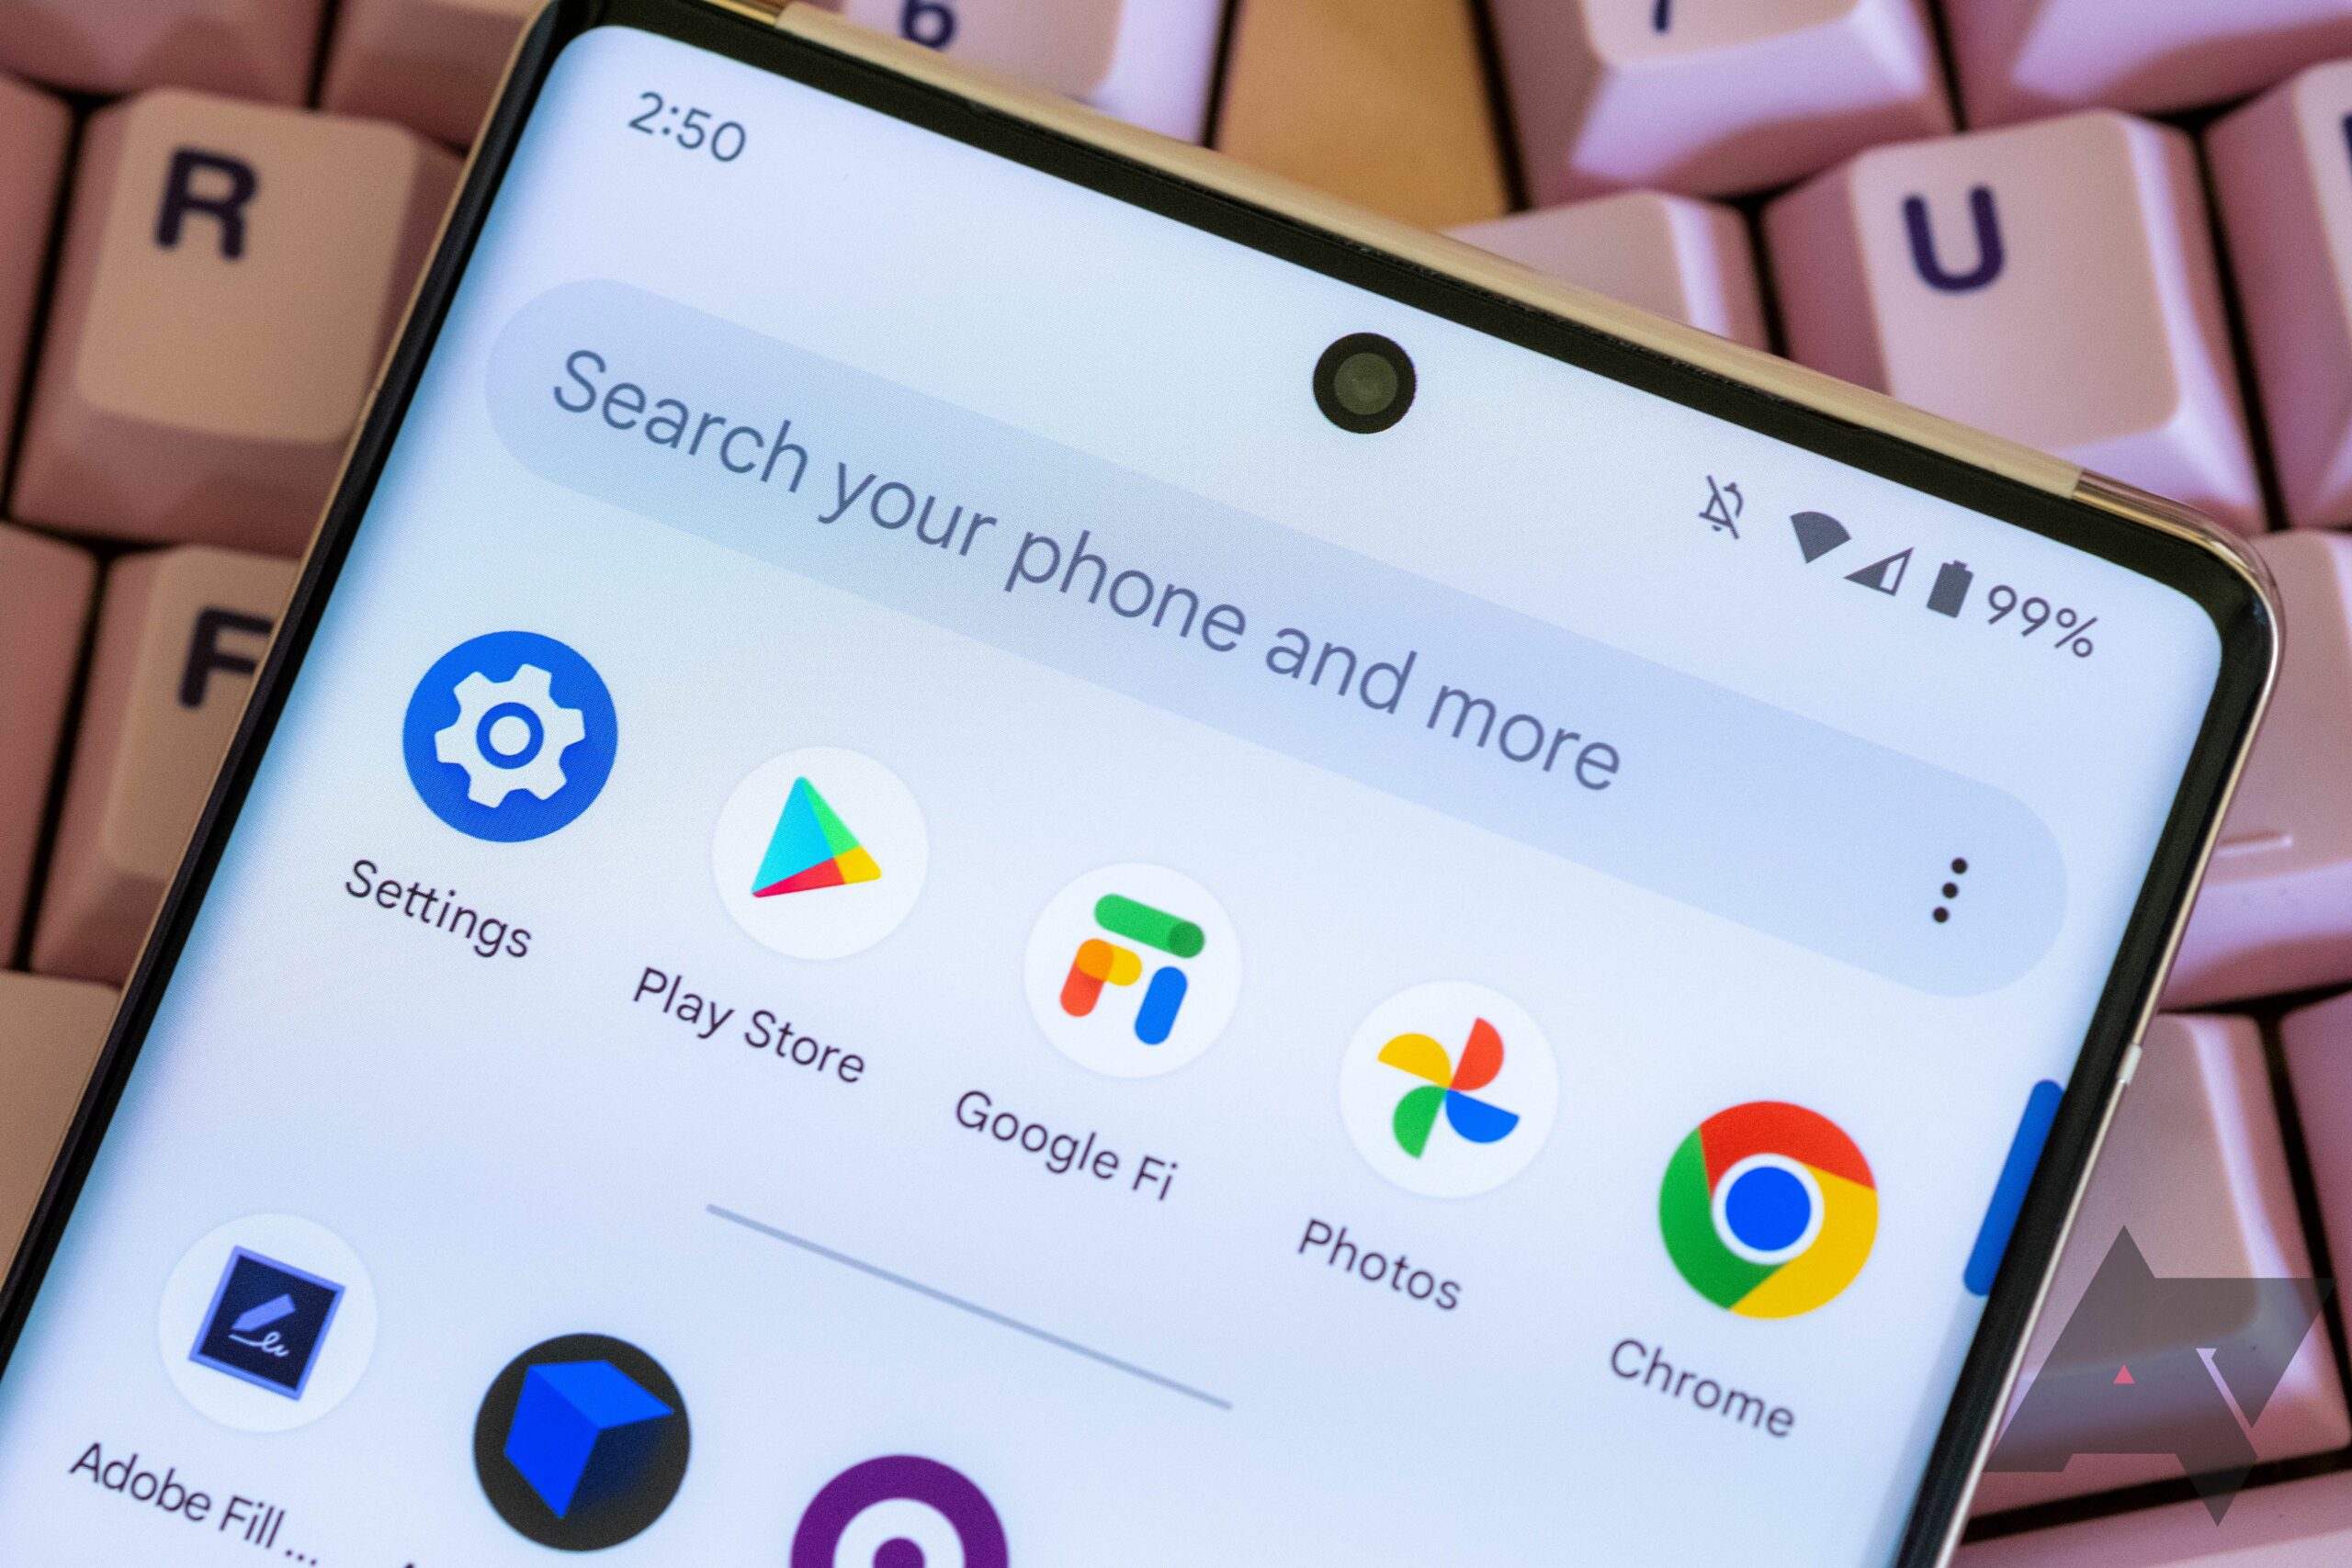 Jak aktualizovat aplikace na Androidu mimo Google Play Store?